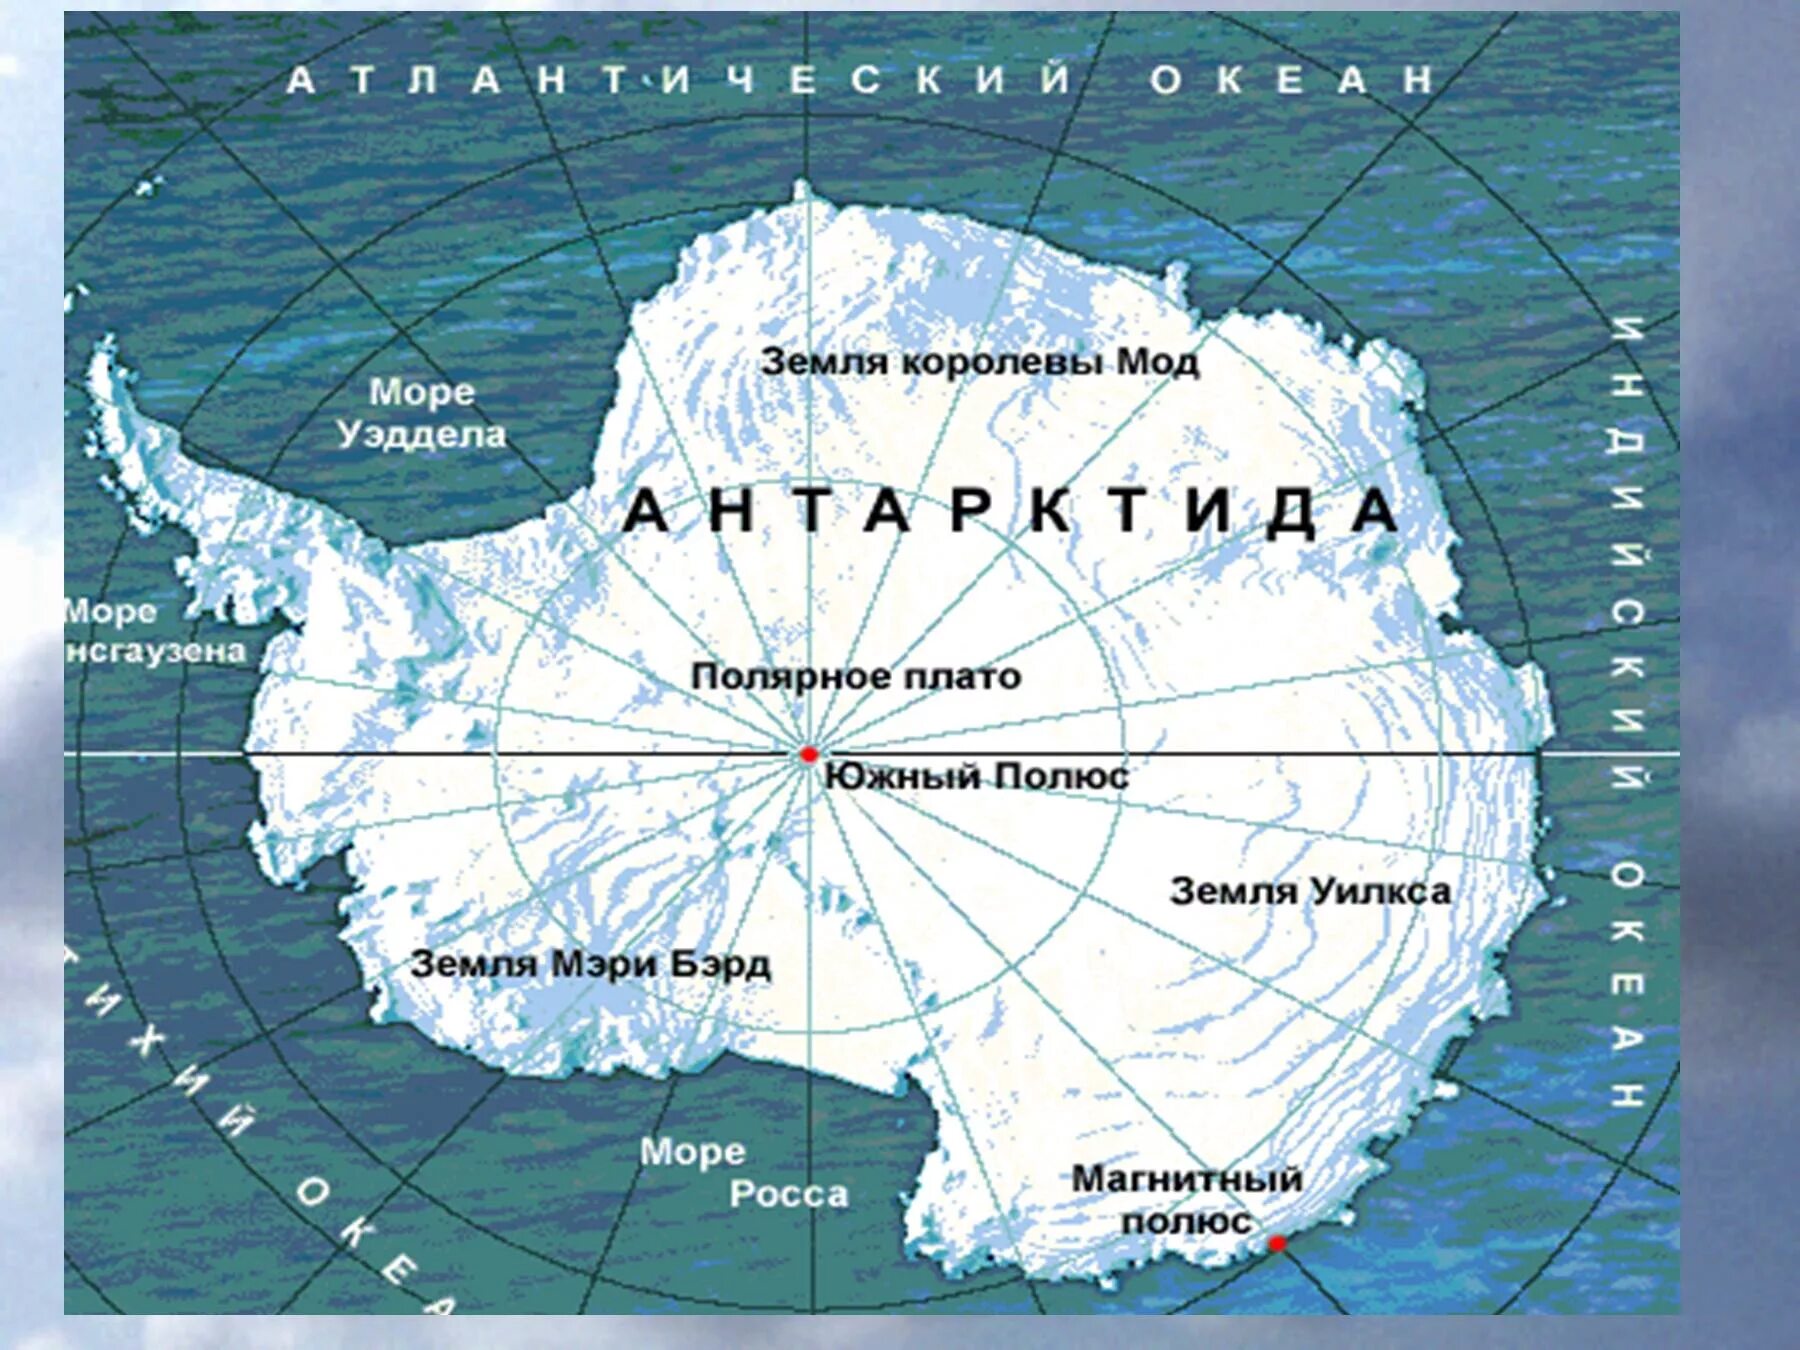 Положение антарктиды к океанам. Карта Антарктиды моря омывающие Антарктиду. Антарктида моря Росса Уэдделла Беллинсгаузена Амундсена. Моря: Амундсена, Беллинсгаузена, Росса, Уэдделла..